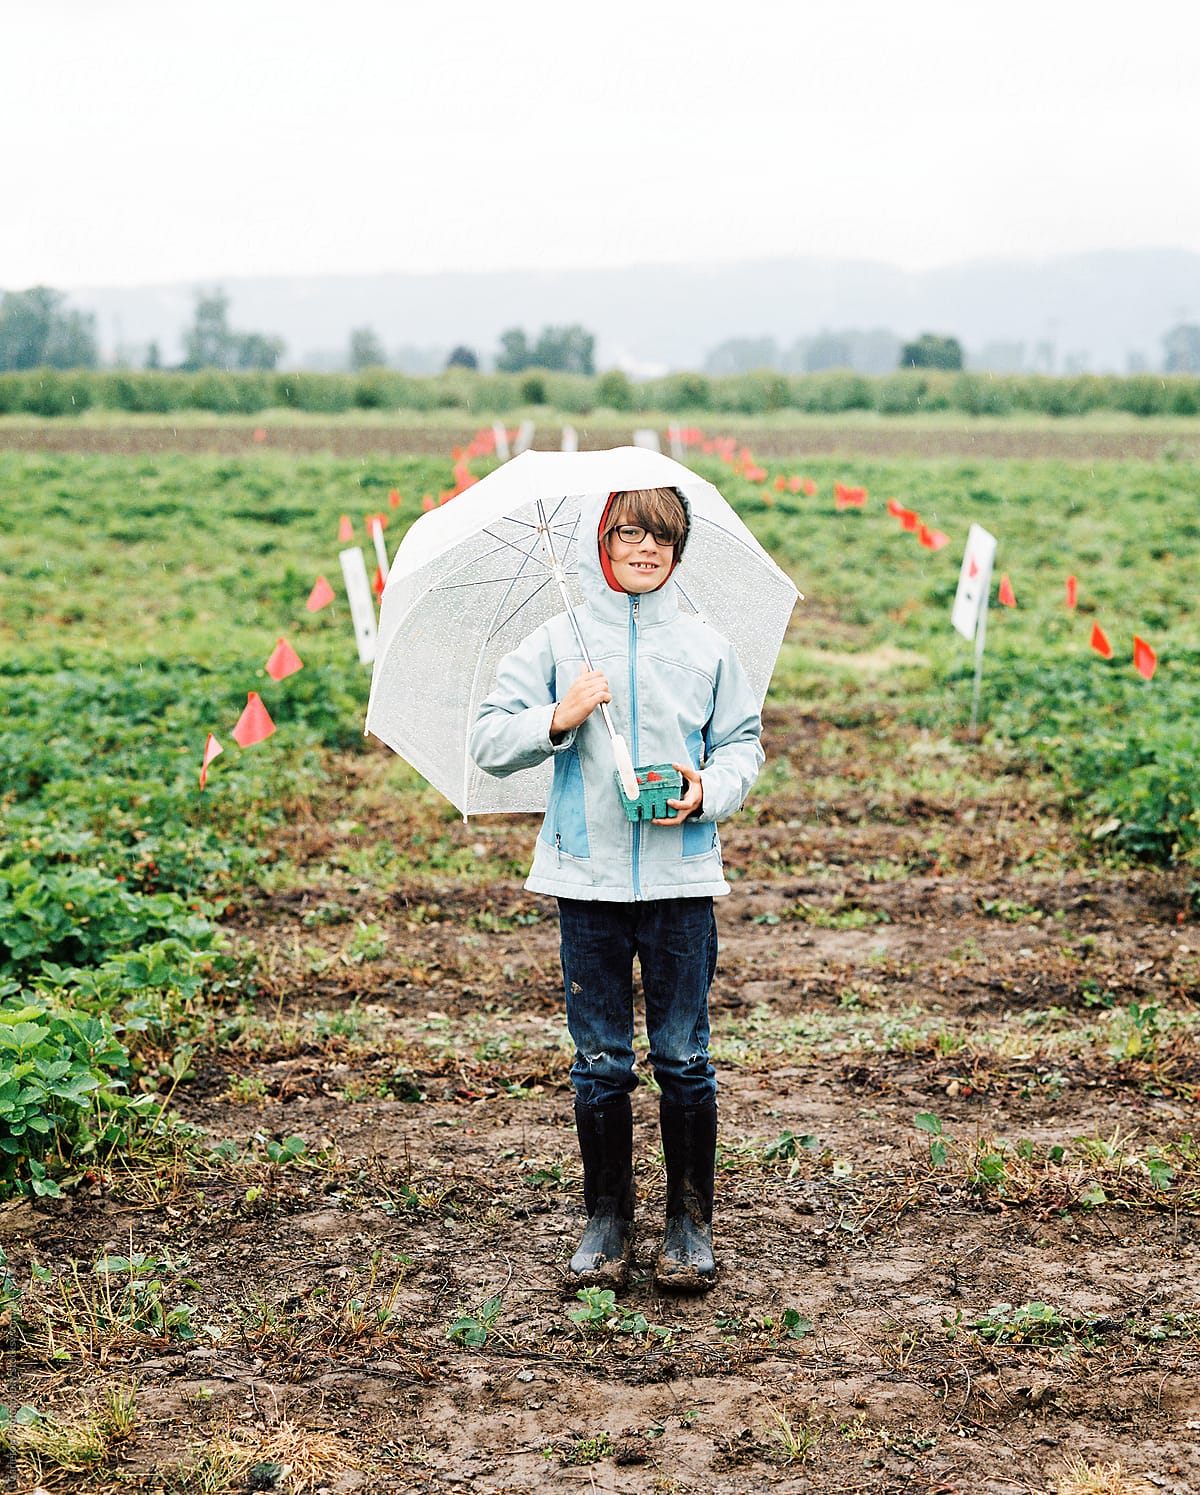 Picking strawberries in the rain in Oregon